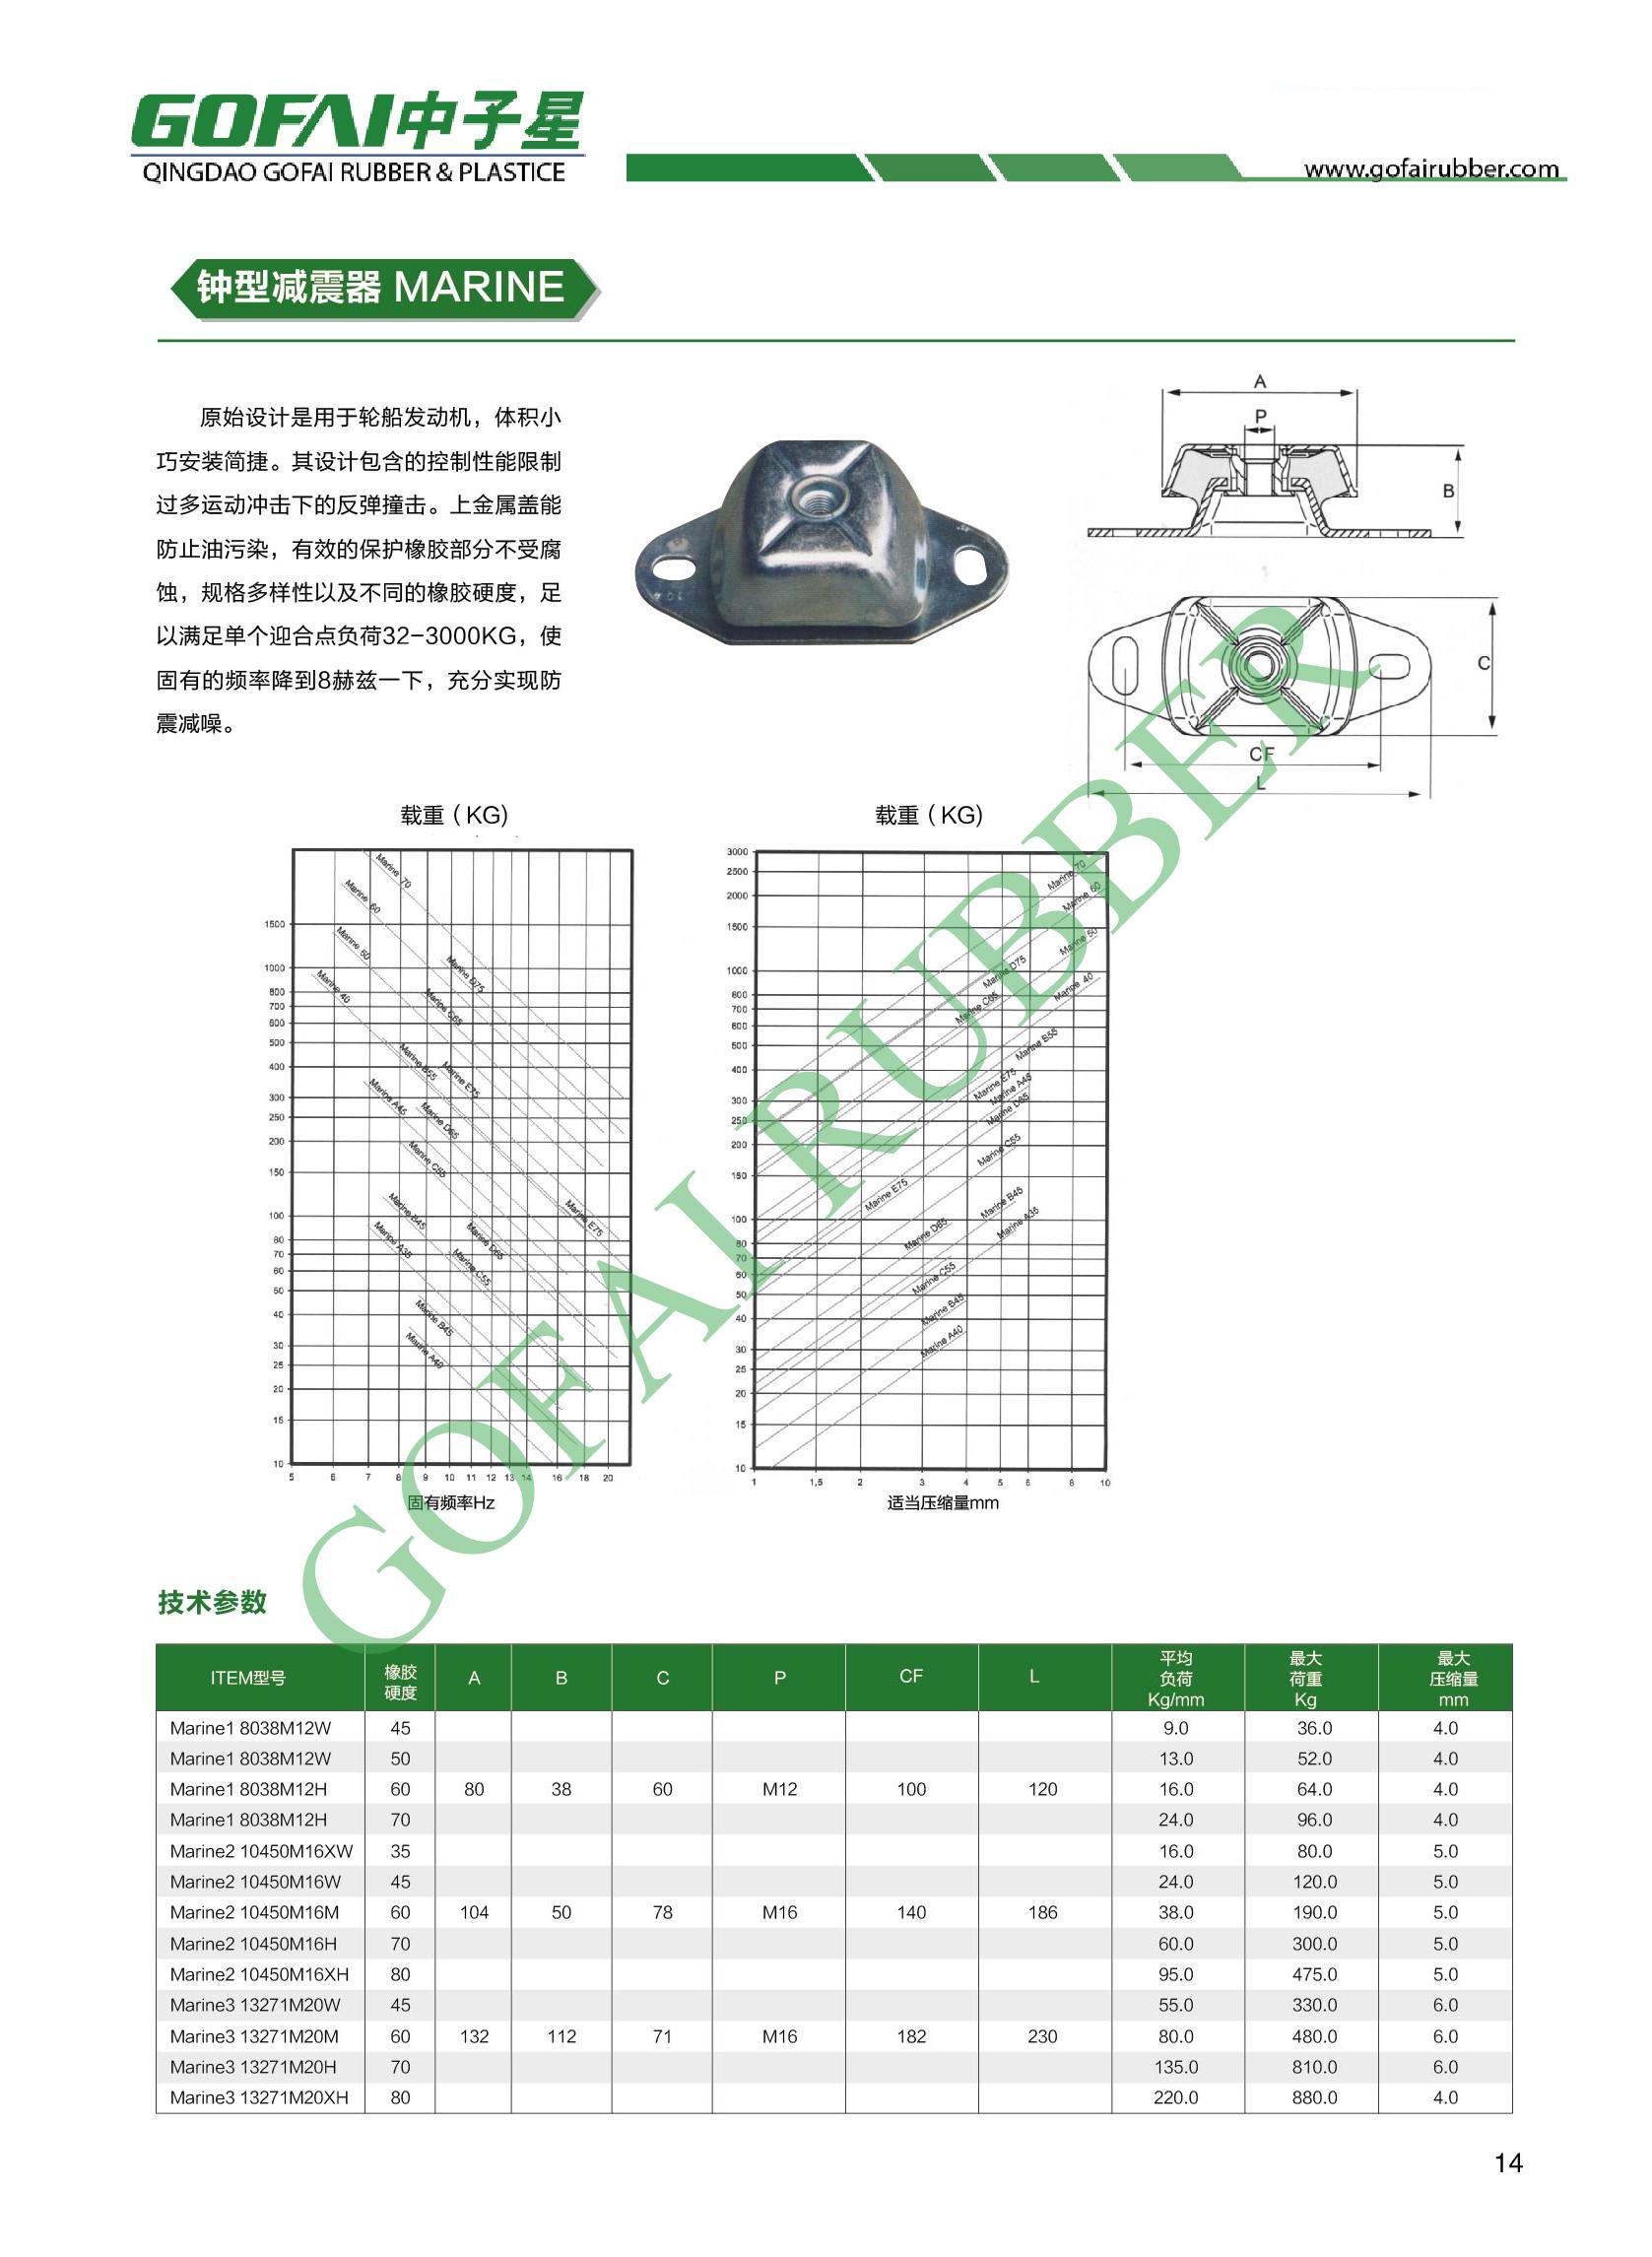 GOFAI catalog for rubber anti-vibration mounts_12.jpg